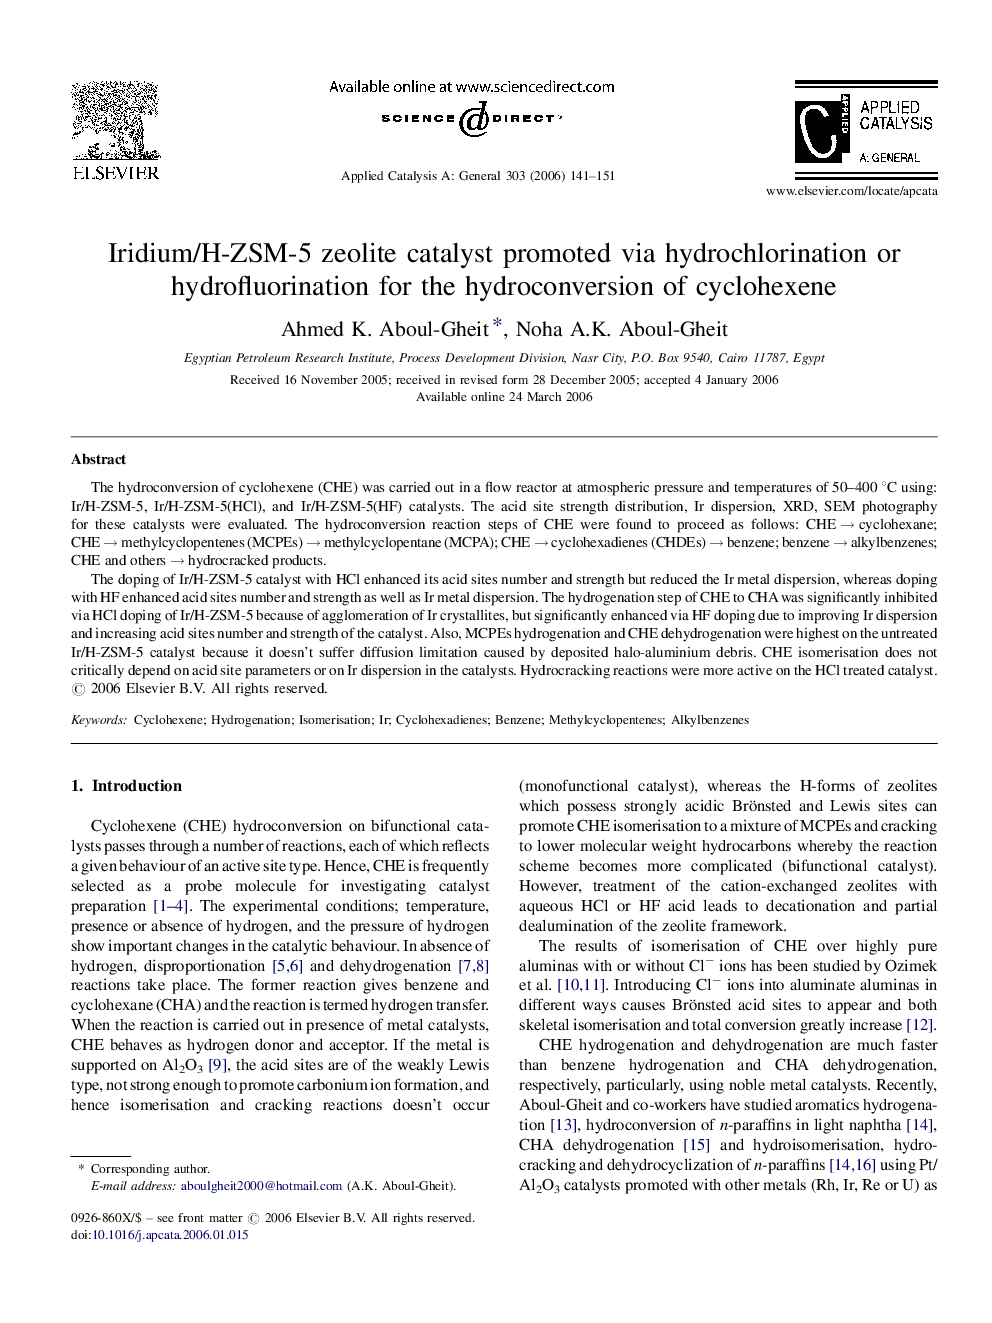 Iridium/H-ZSM-5 zeolite catalyst promoted via hydrochlorination or hydrofluorination for the hydroconversion of cyclohexene